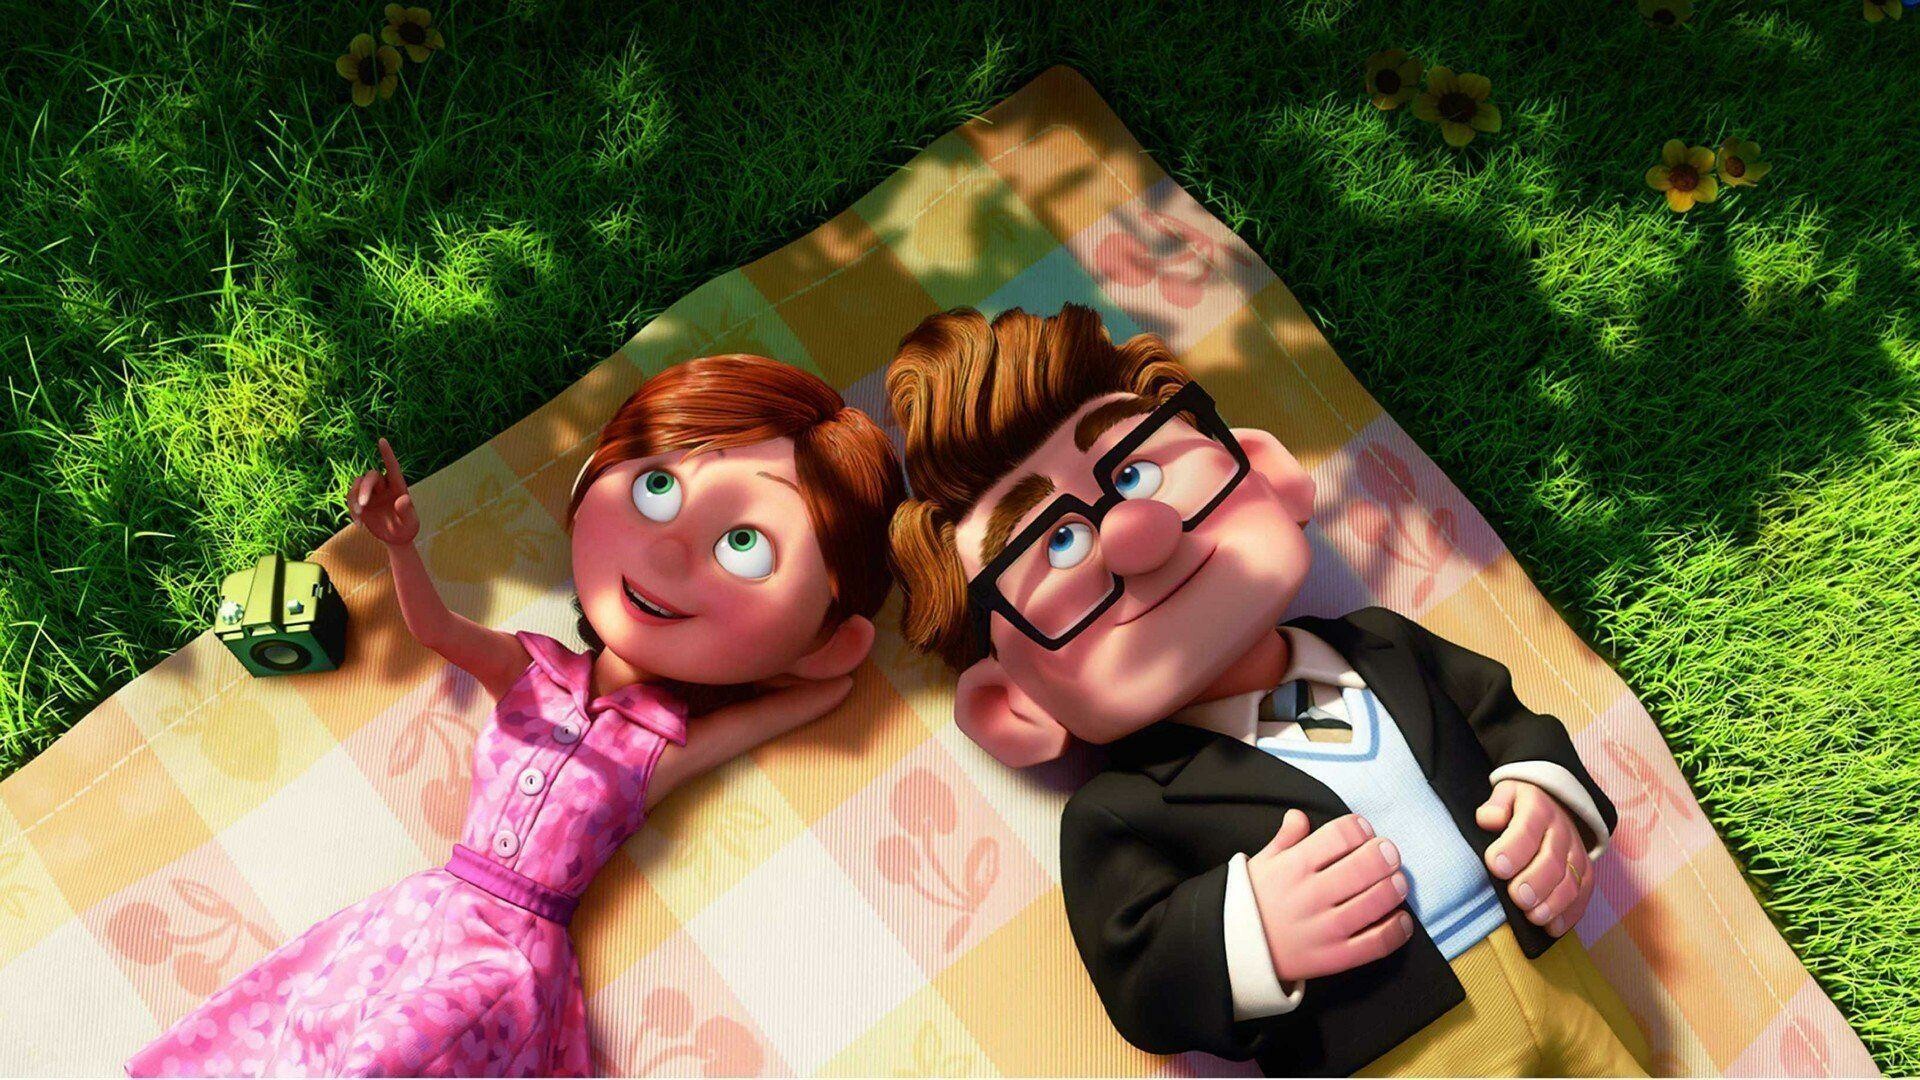 Up (Cartoon): Carl and Ellie, Fictional characters, Pixar Animation Studios. 1920x1080 Full HD Wallpaper.